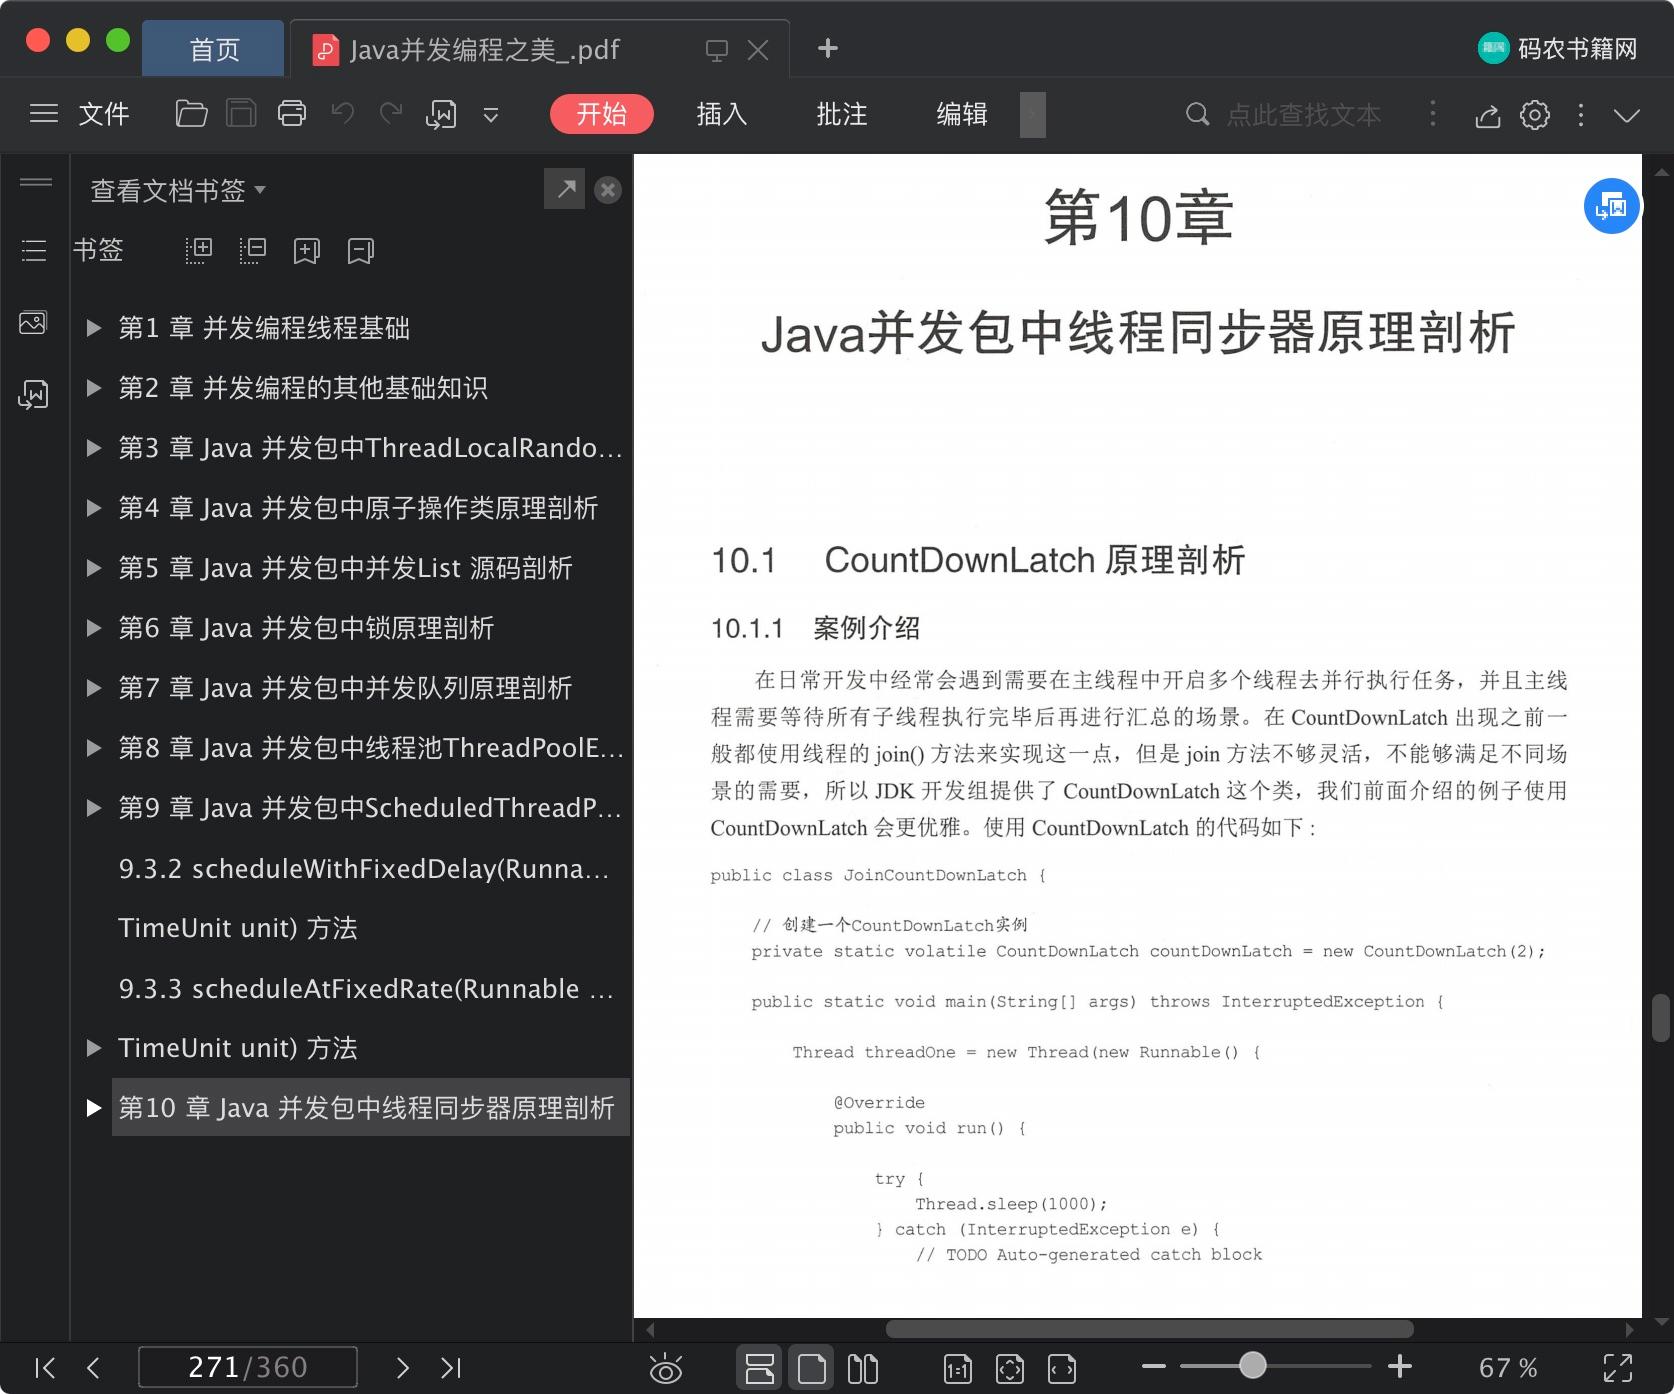 Java教程并发编程之美pdf电子书籍下载百度网盘